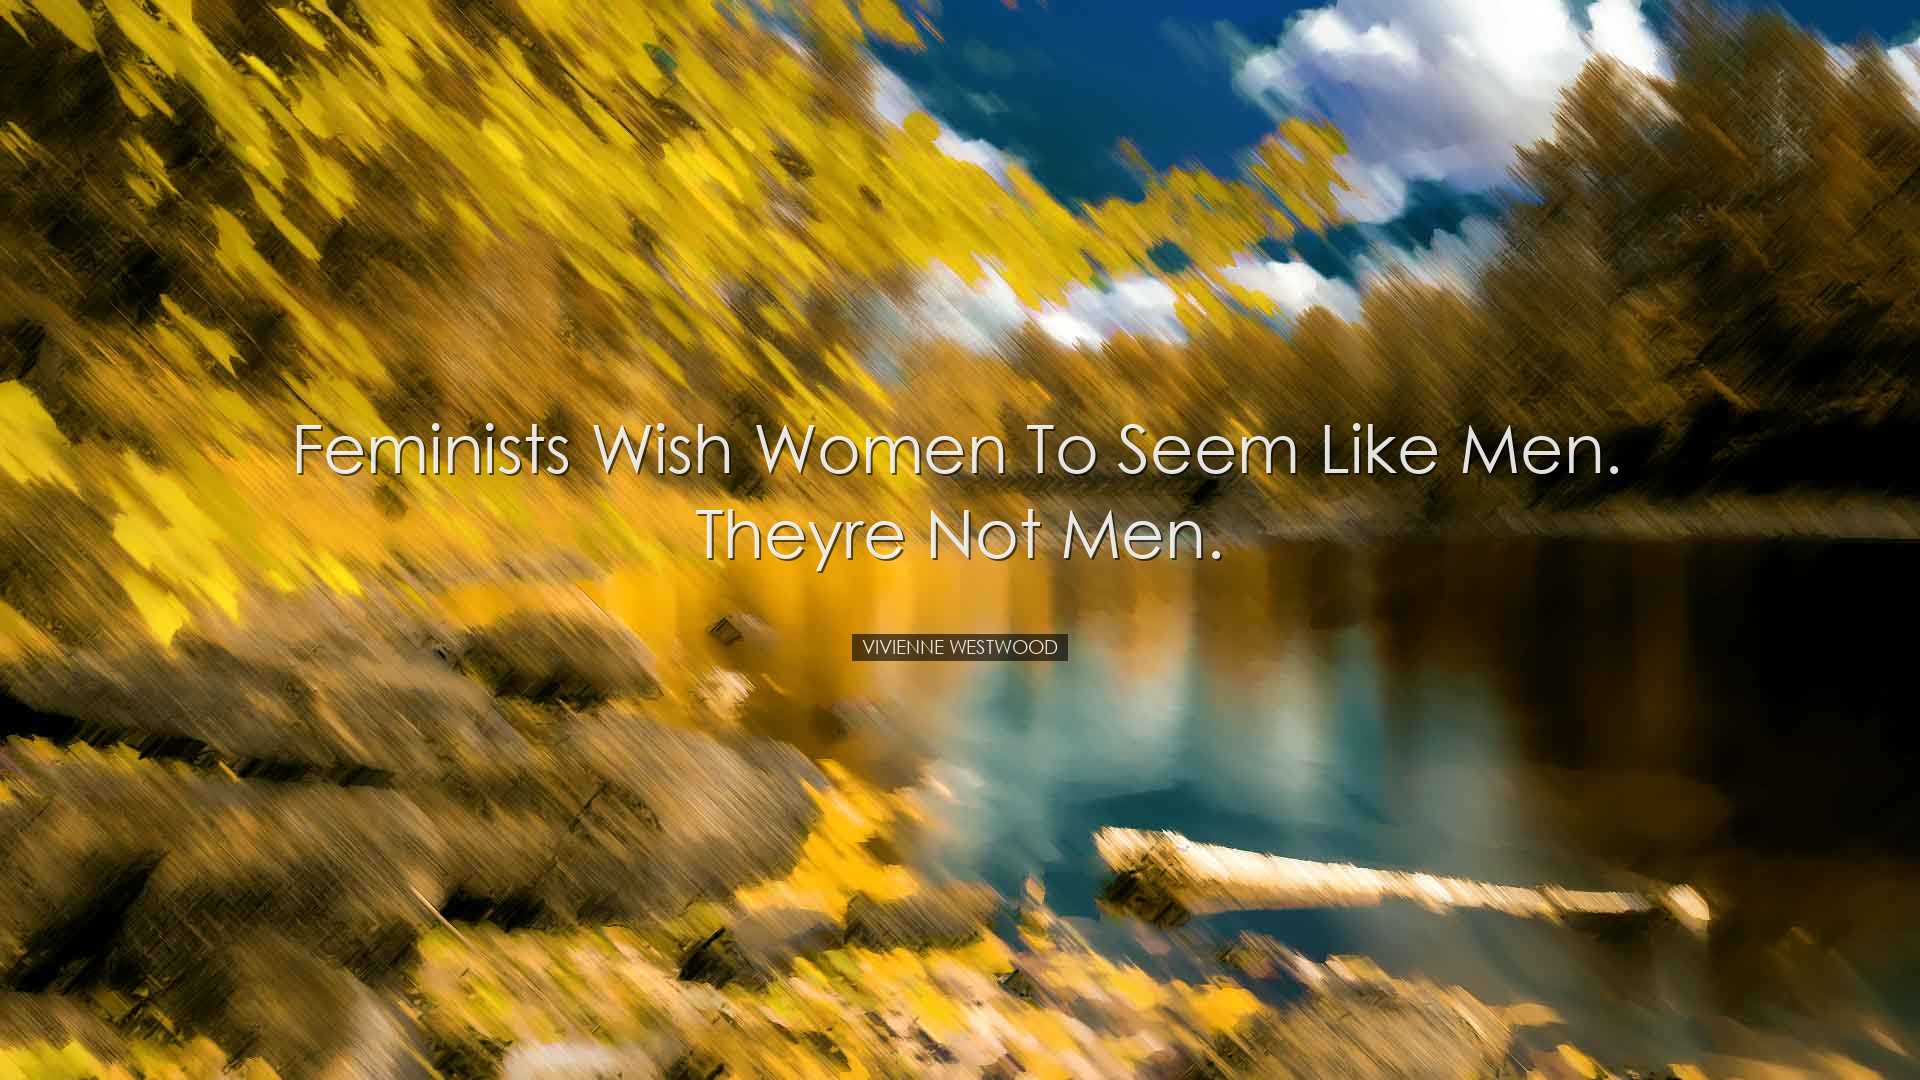 Feminists wish women to seem like men. Theyre not men. - Vivienne